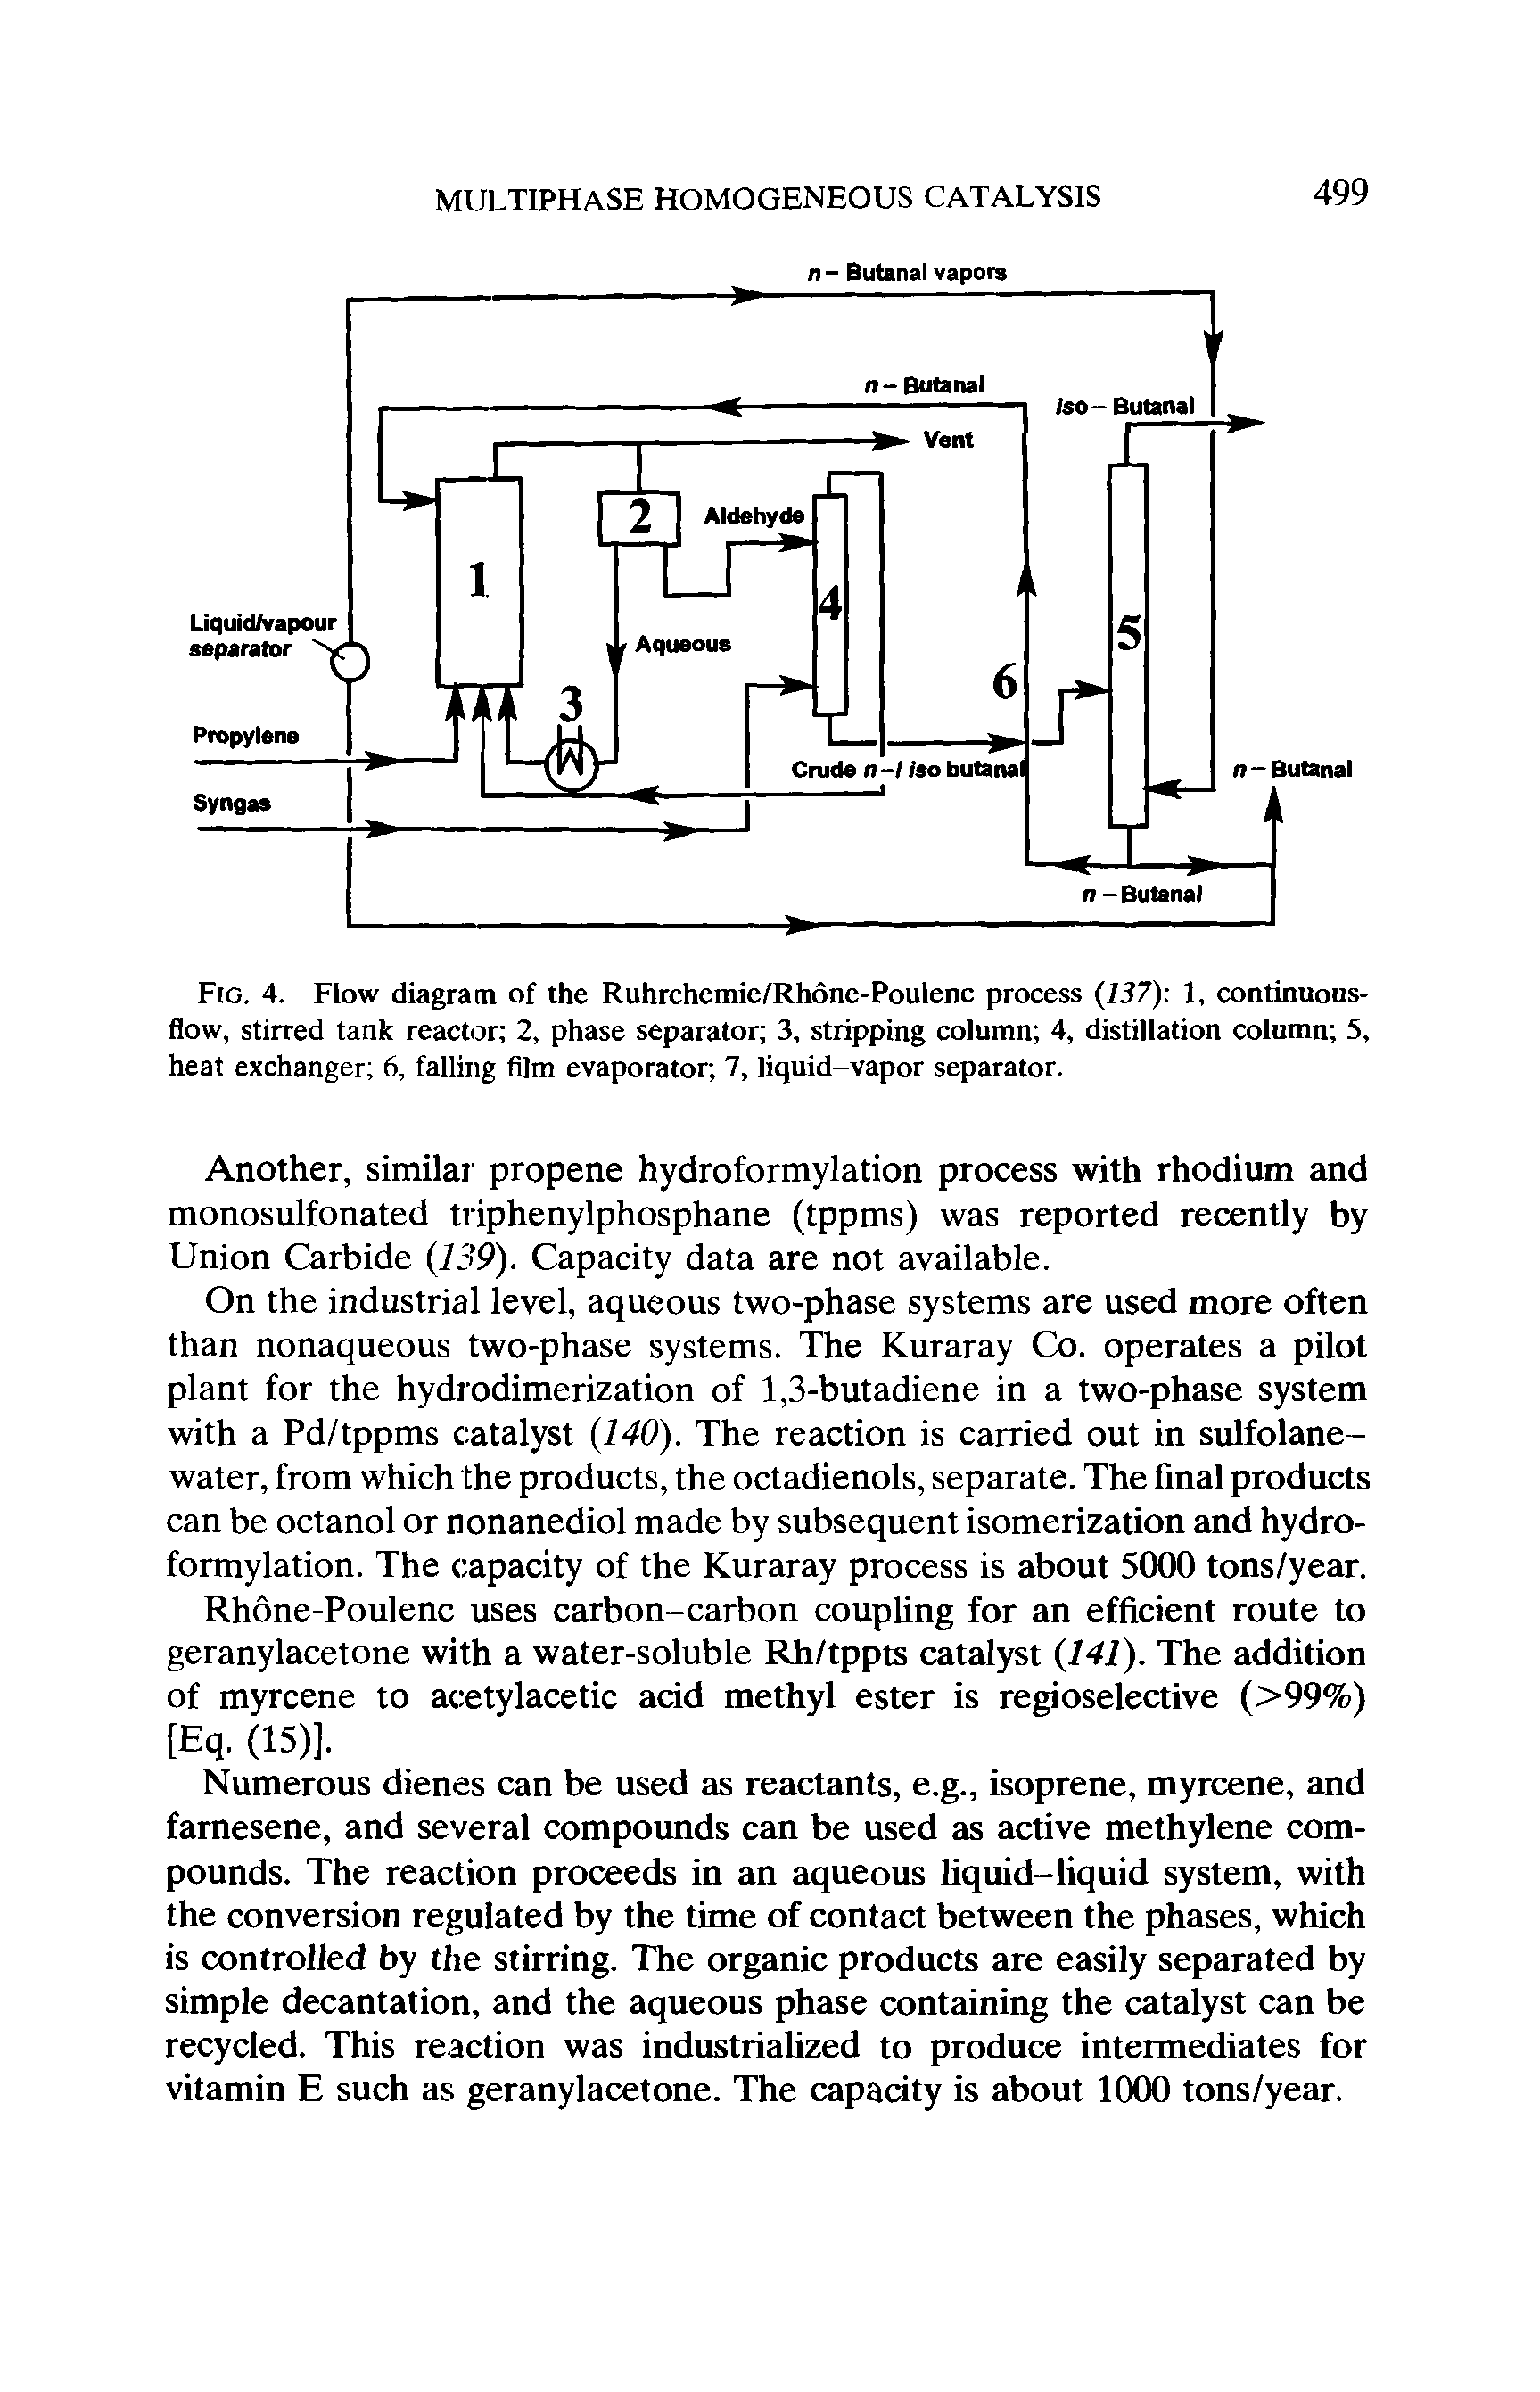 Fig. 4. Flow diagram of the Ruhrchemie/Rhone-Poulenc process (137) 1, continuous-flow, stirred tank reactor 2, phase separator 3, stripping column 4, distillation column 5, heat exchanger 6, falling film evaporator 7, liquid-vapor separator.